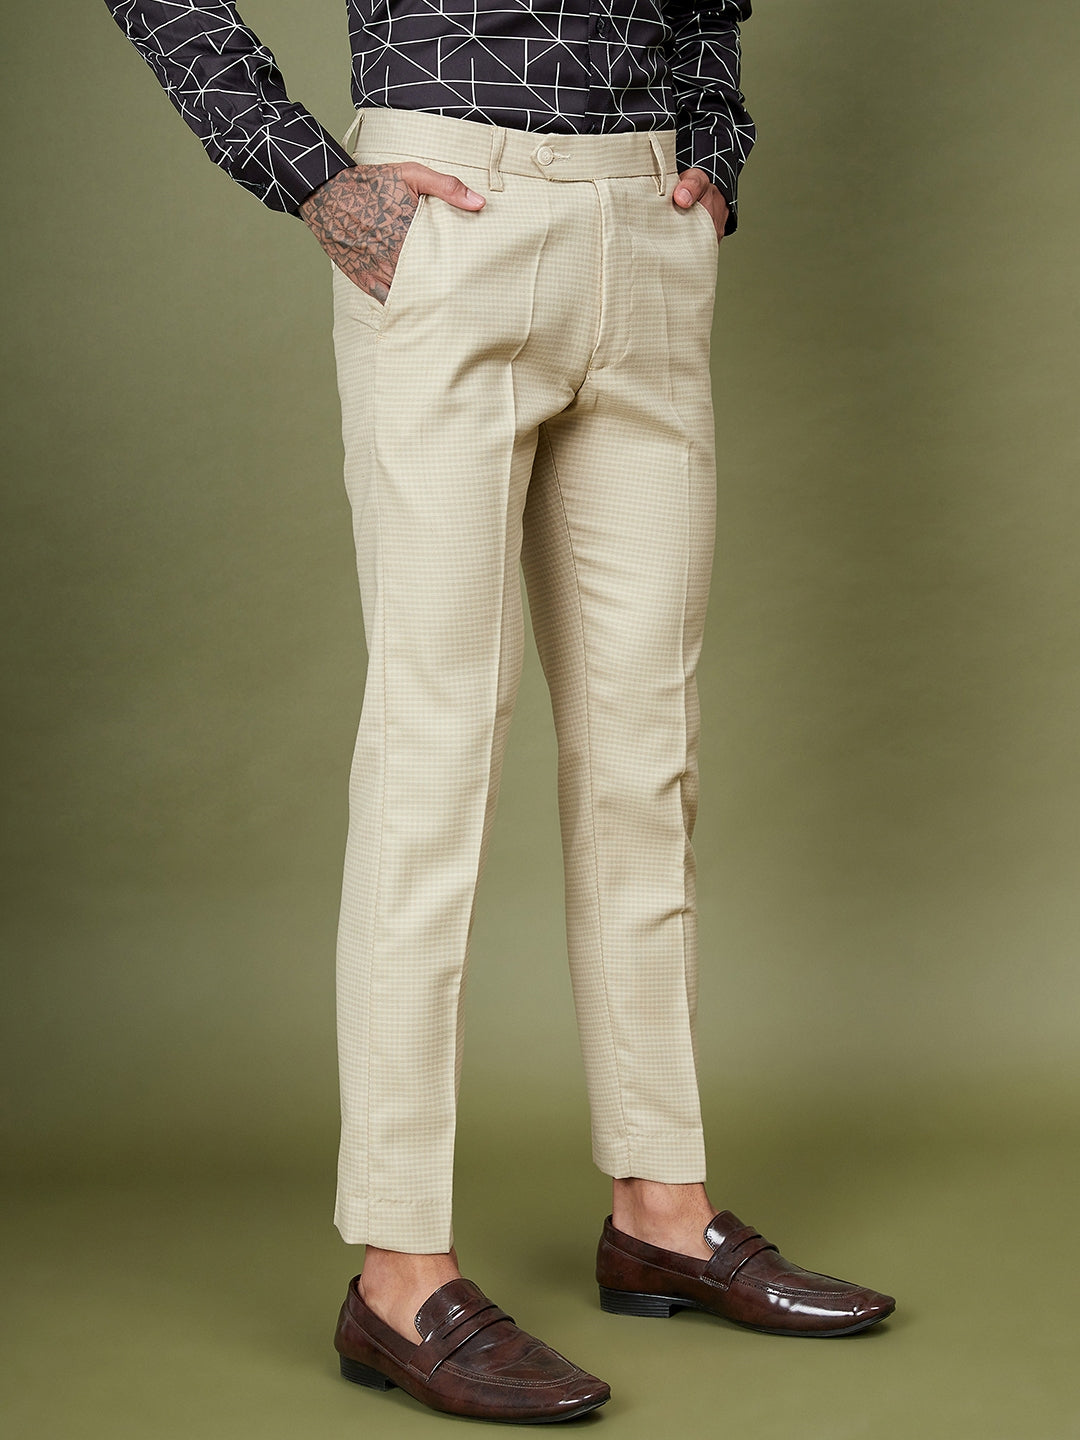 Buy In-Zone Cream Color Check Print Formal Trouser for Men's & Boy's-10190  (32) at Amazon.in